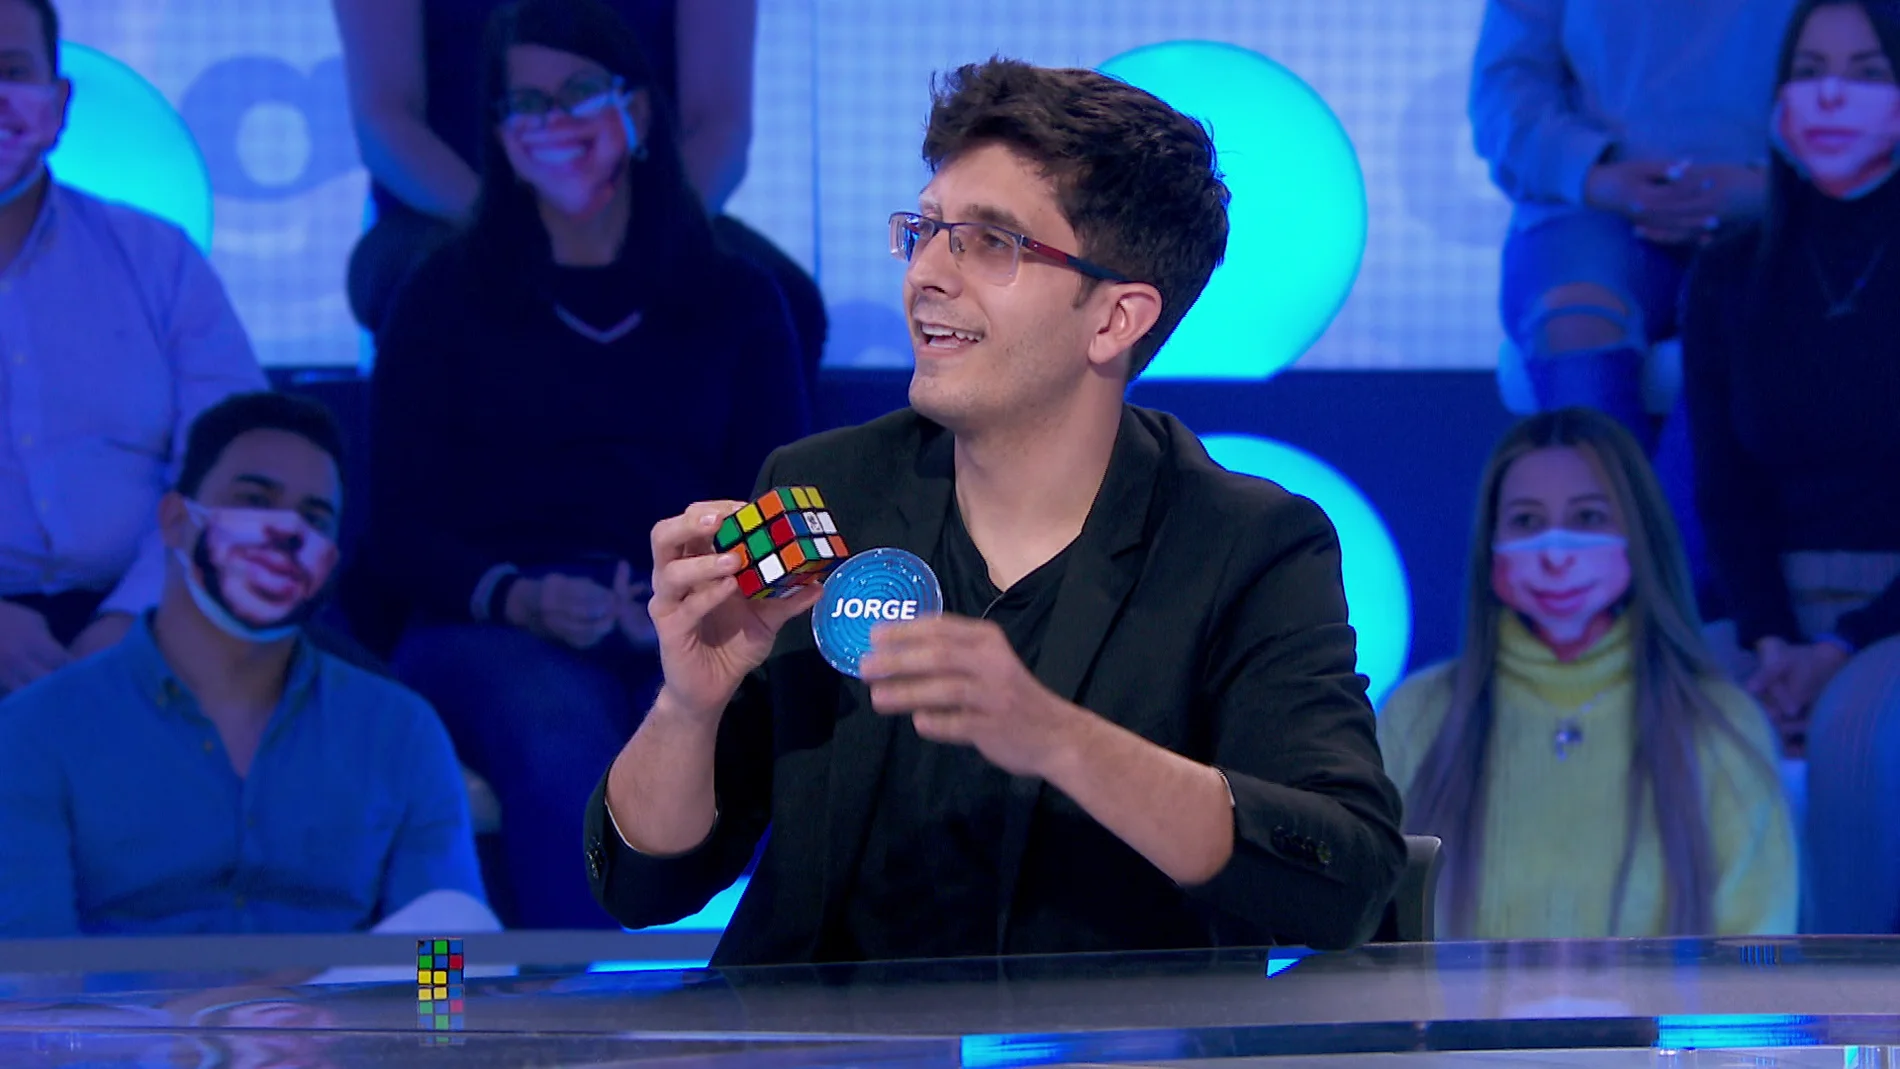 Jorge Luengo deja sin palabras a Roberto Leal con un cubo de Rubik: “Me da mucho coraje”